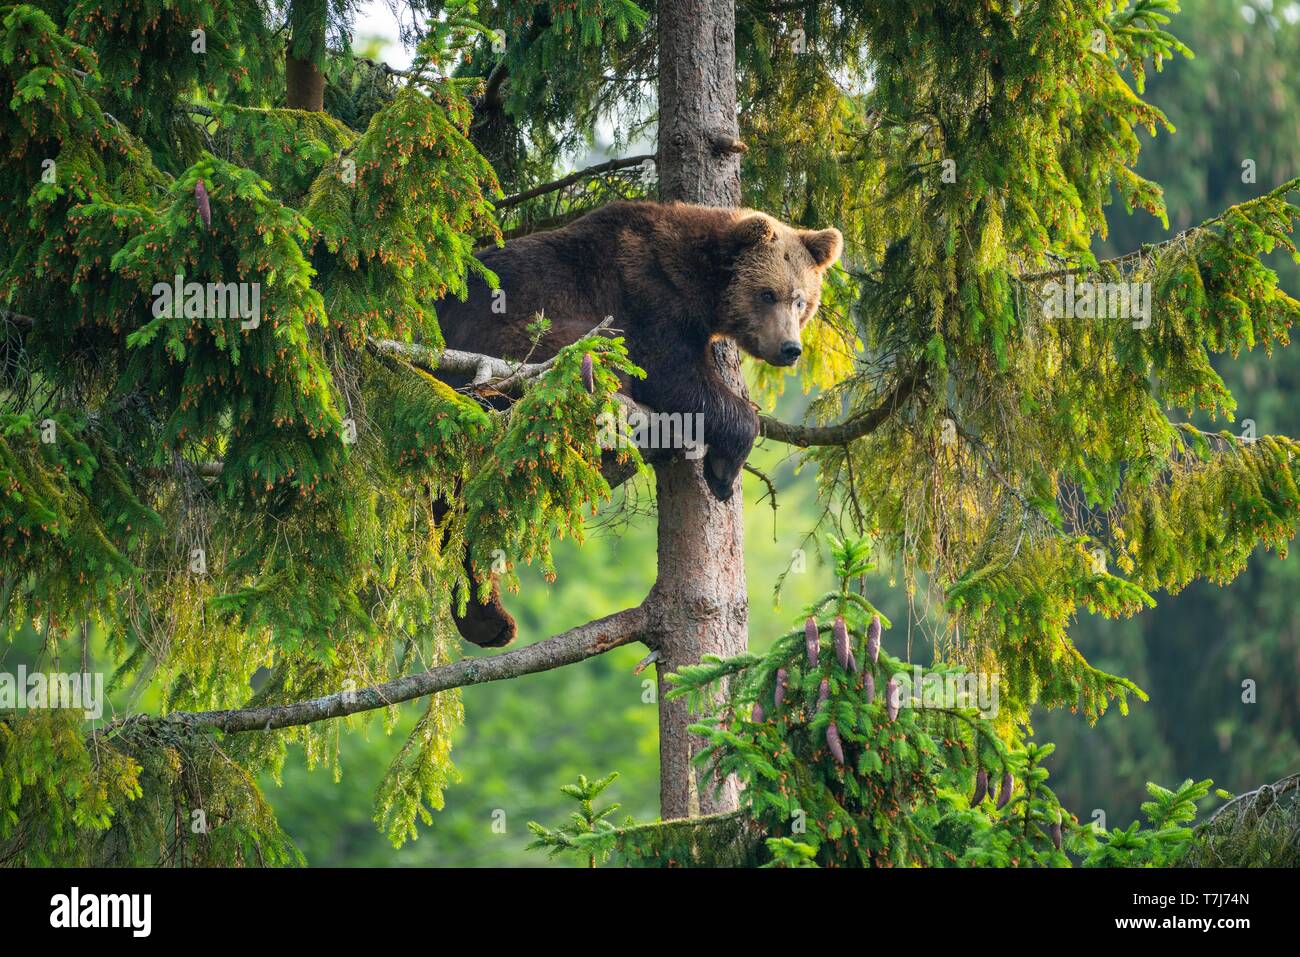 European Brown bear (Ursus arctos) sitting in a tree, National Park Bavarian Forest, Bavaria, Germany Stock Photo